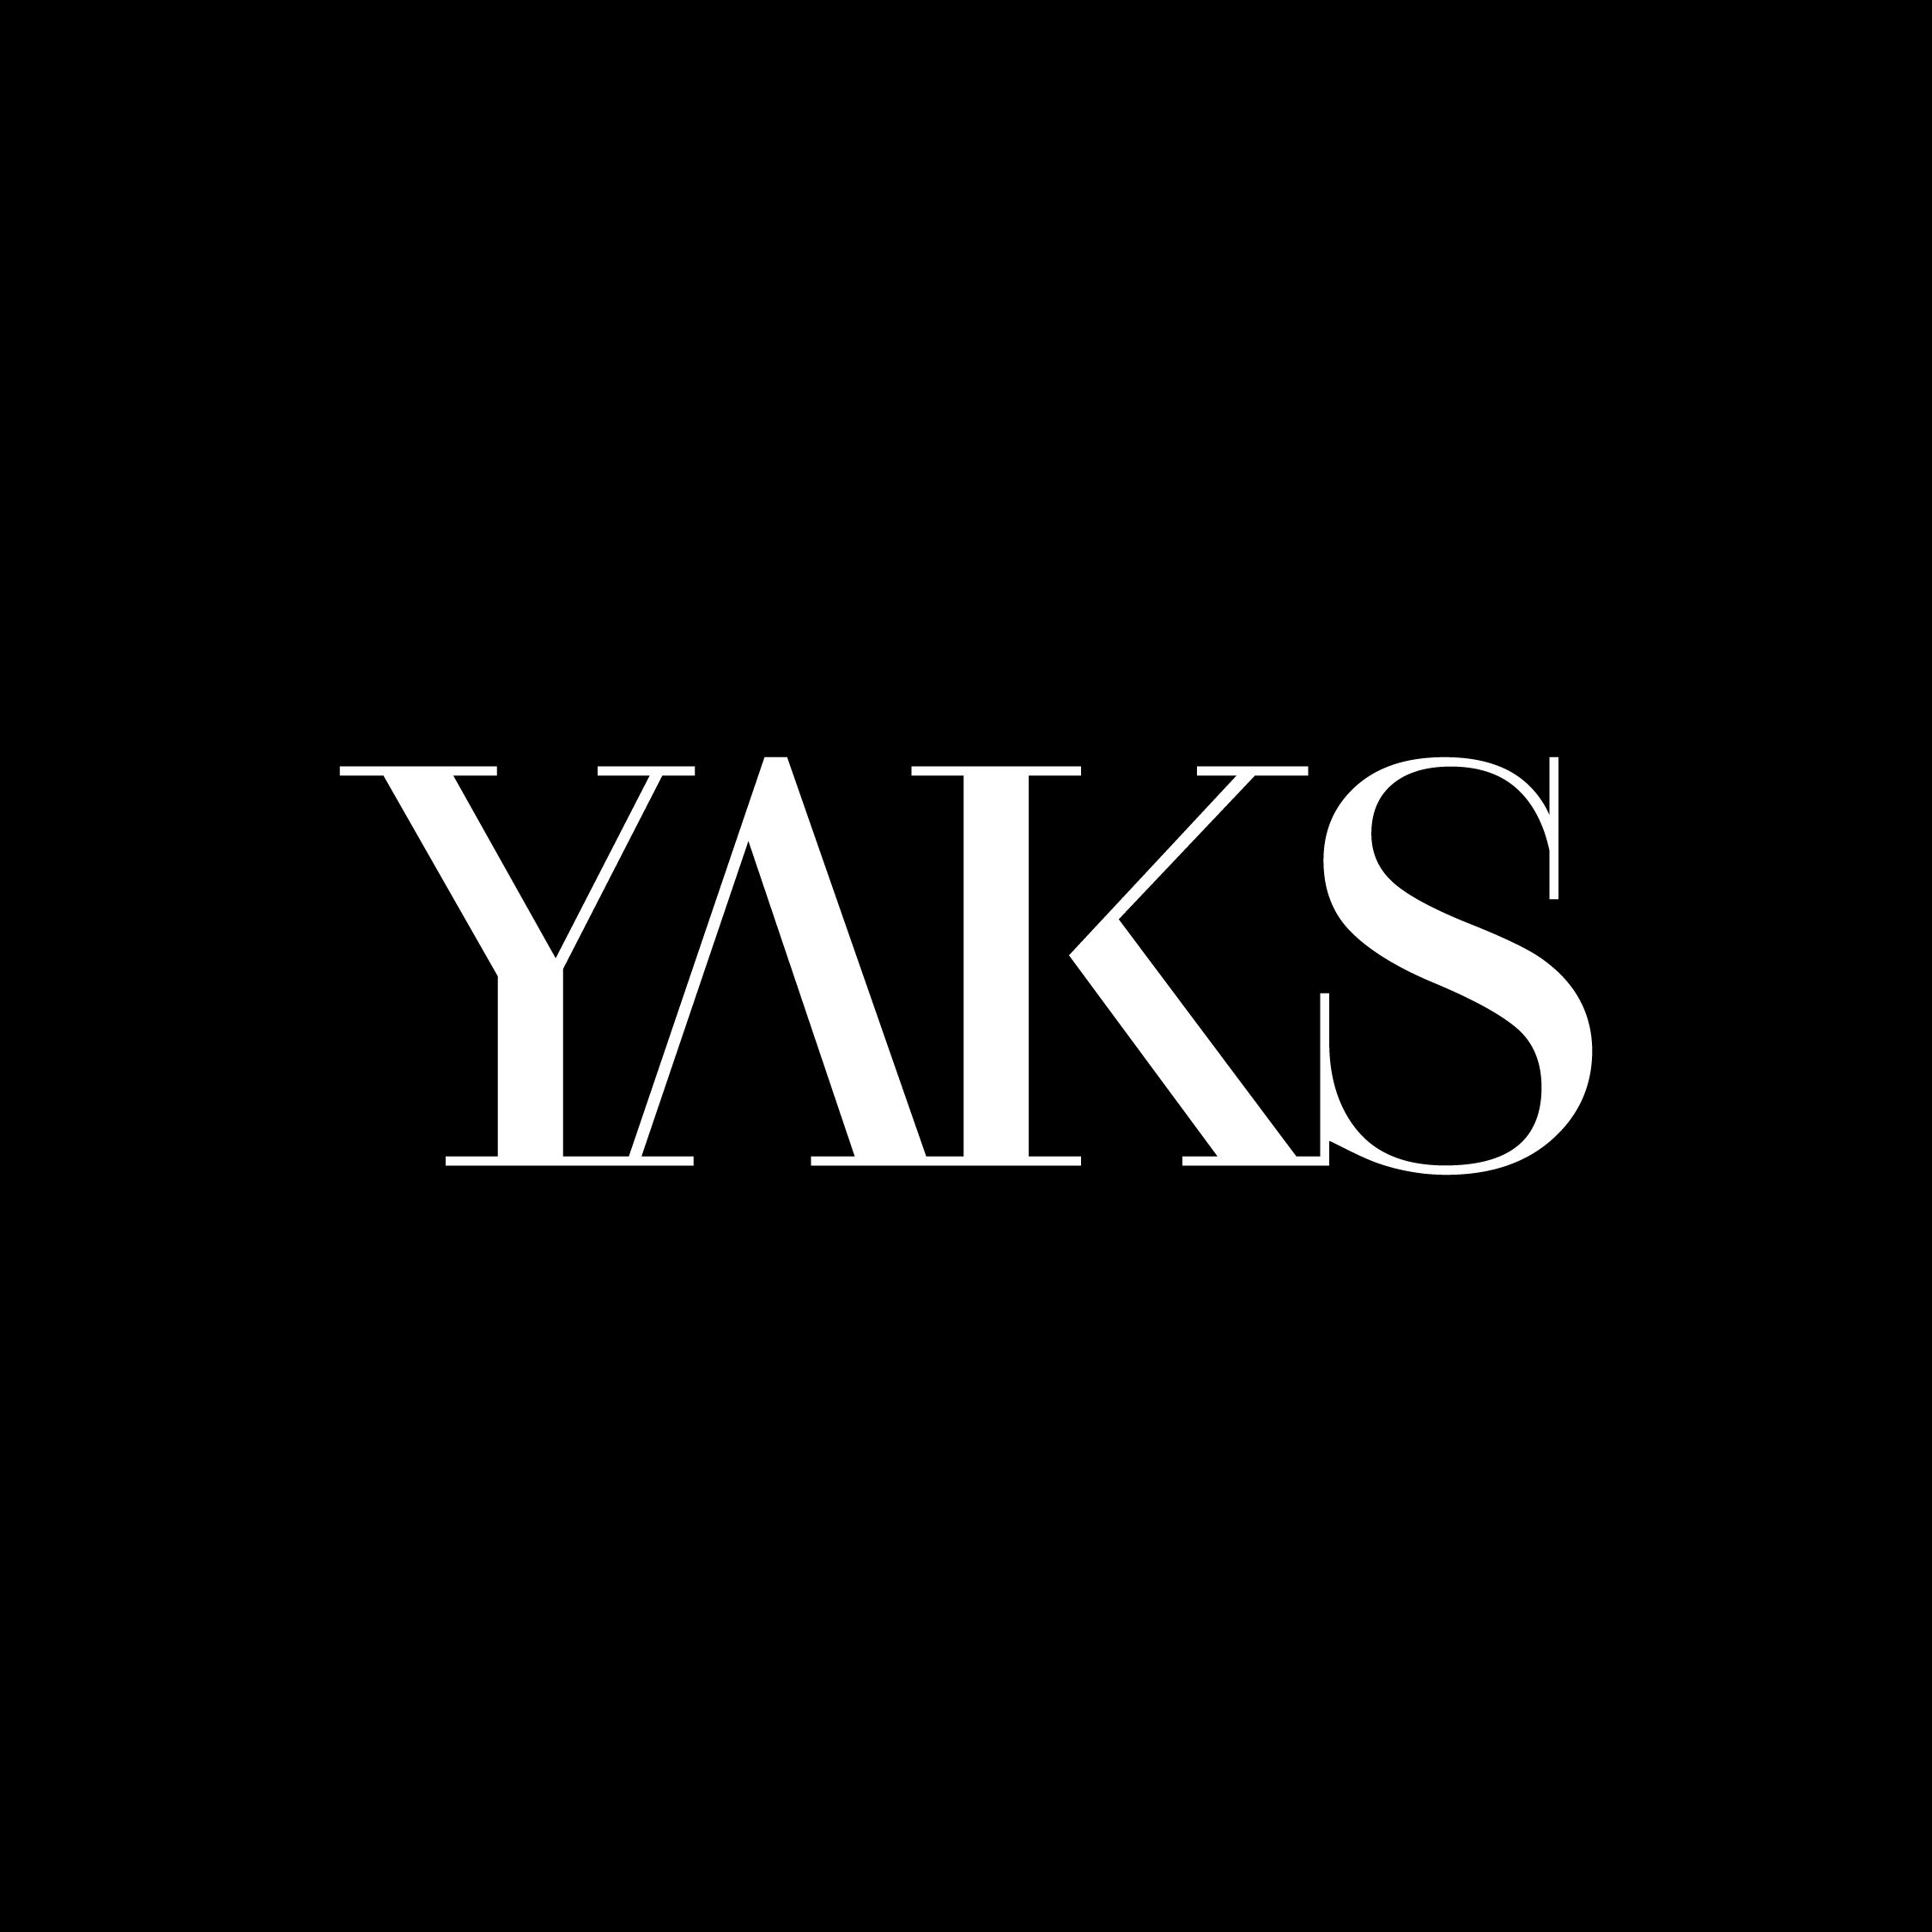 مدیر کارخانه | Factory Manager - یاکس | YAKS kitchen systems